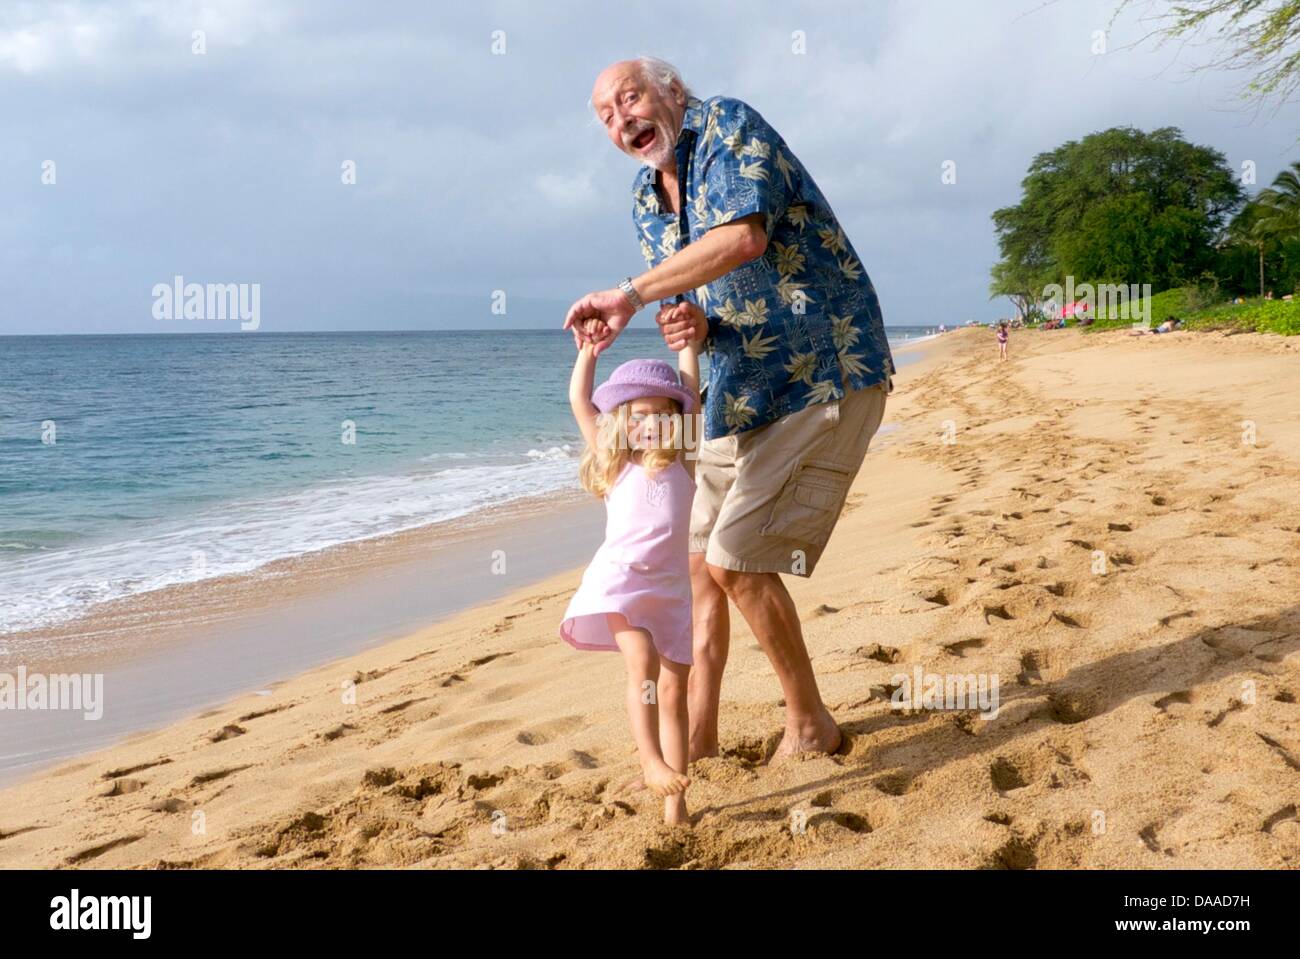 German comic Karl Dall plays with his granddaughter Nelina at the beach on the Hawaiian island of Maui, USA, 22 January 2011. On 01 February 2011, Mr Dall turns 70. Photo: Jovan Nenadic Stock Photo